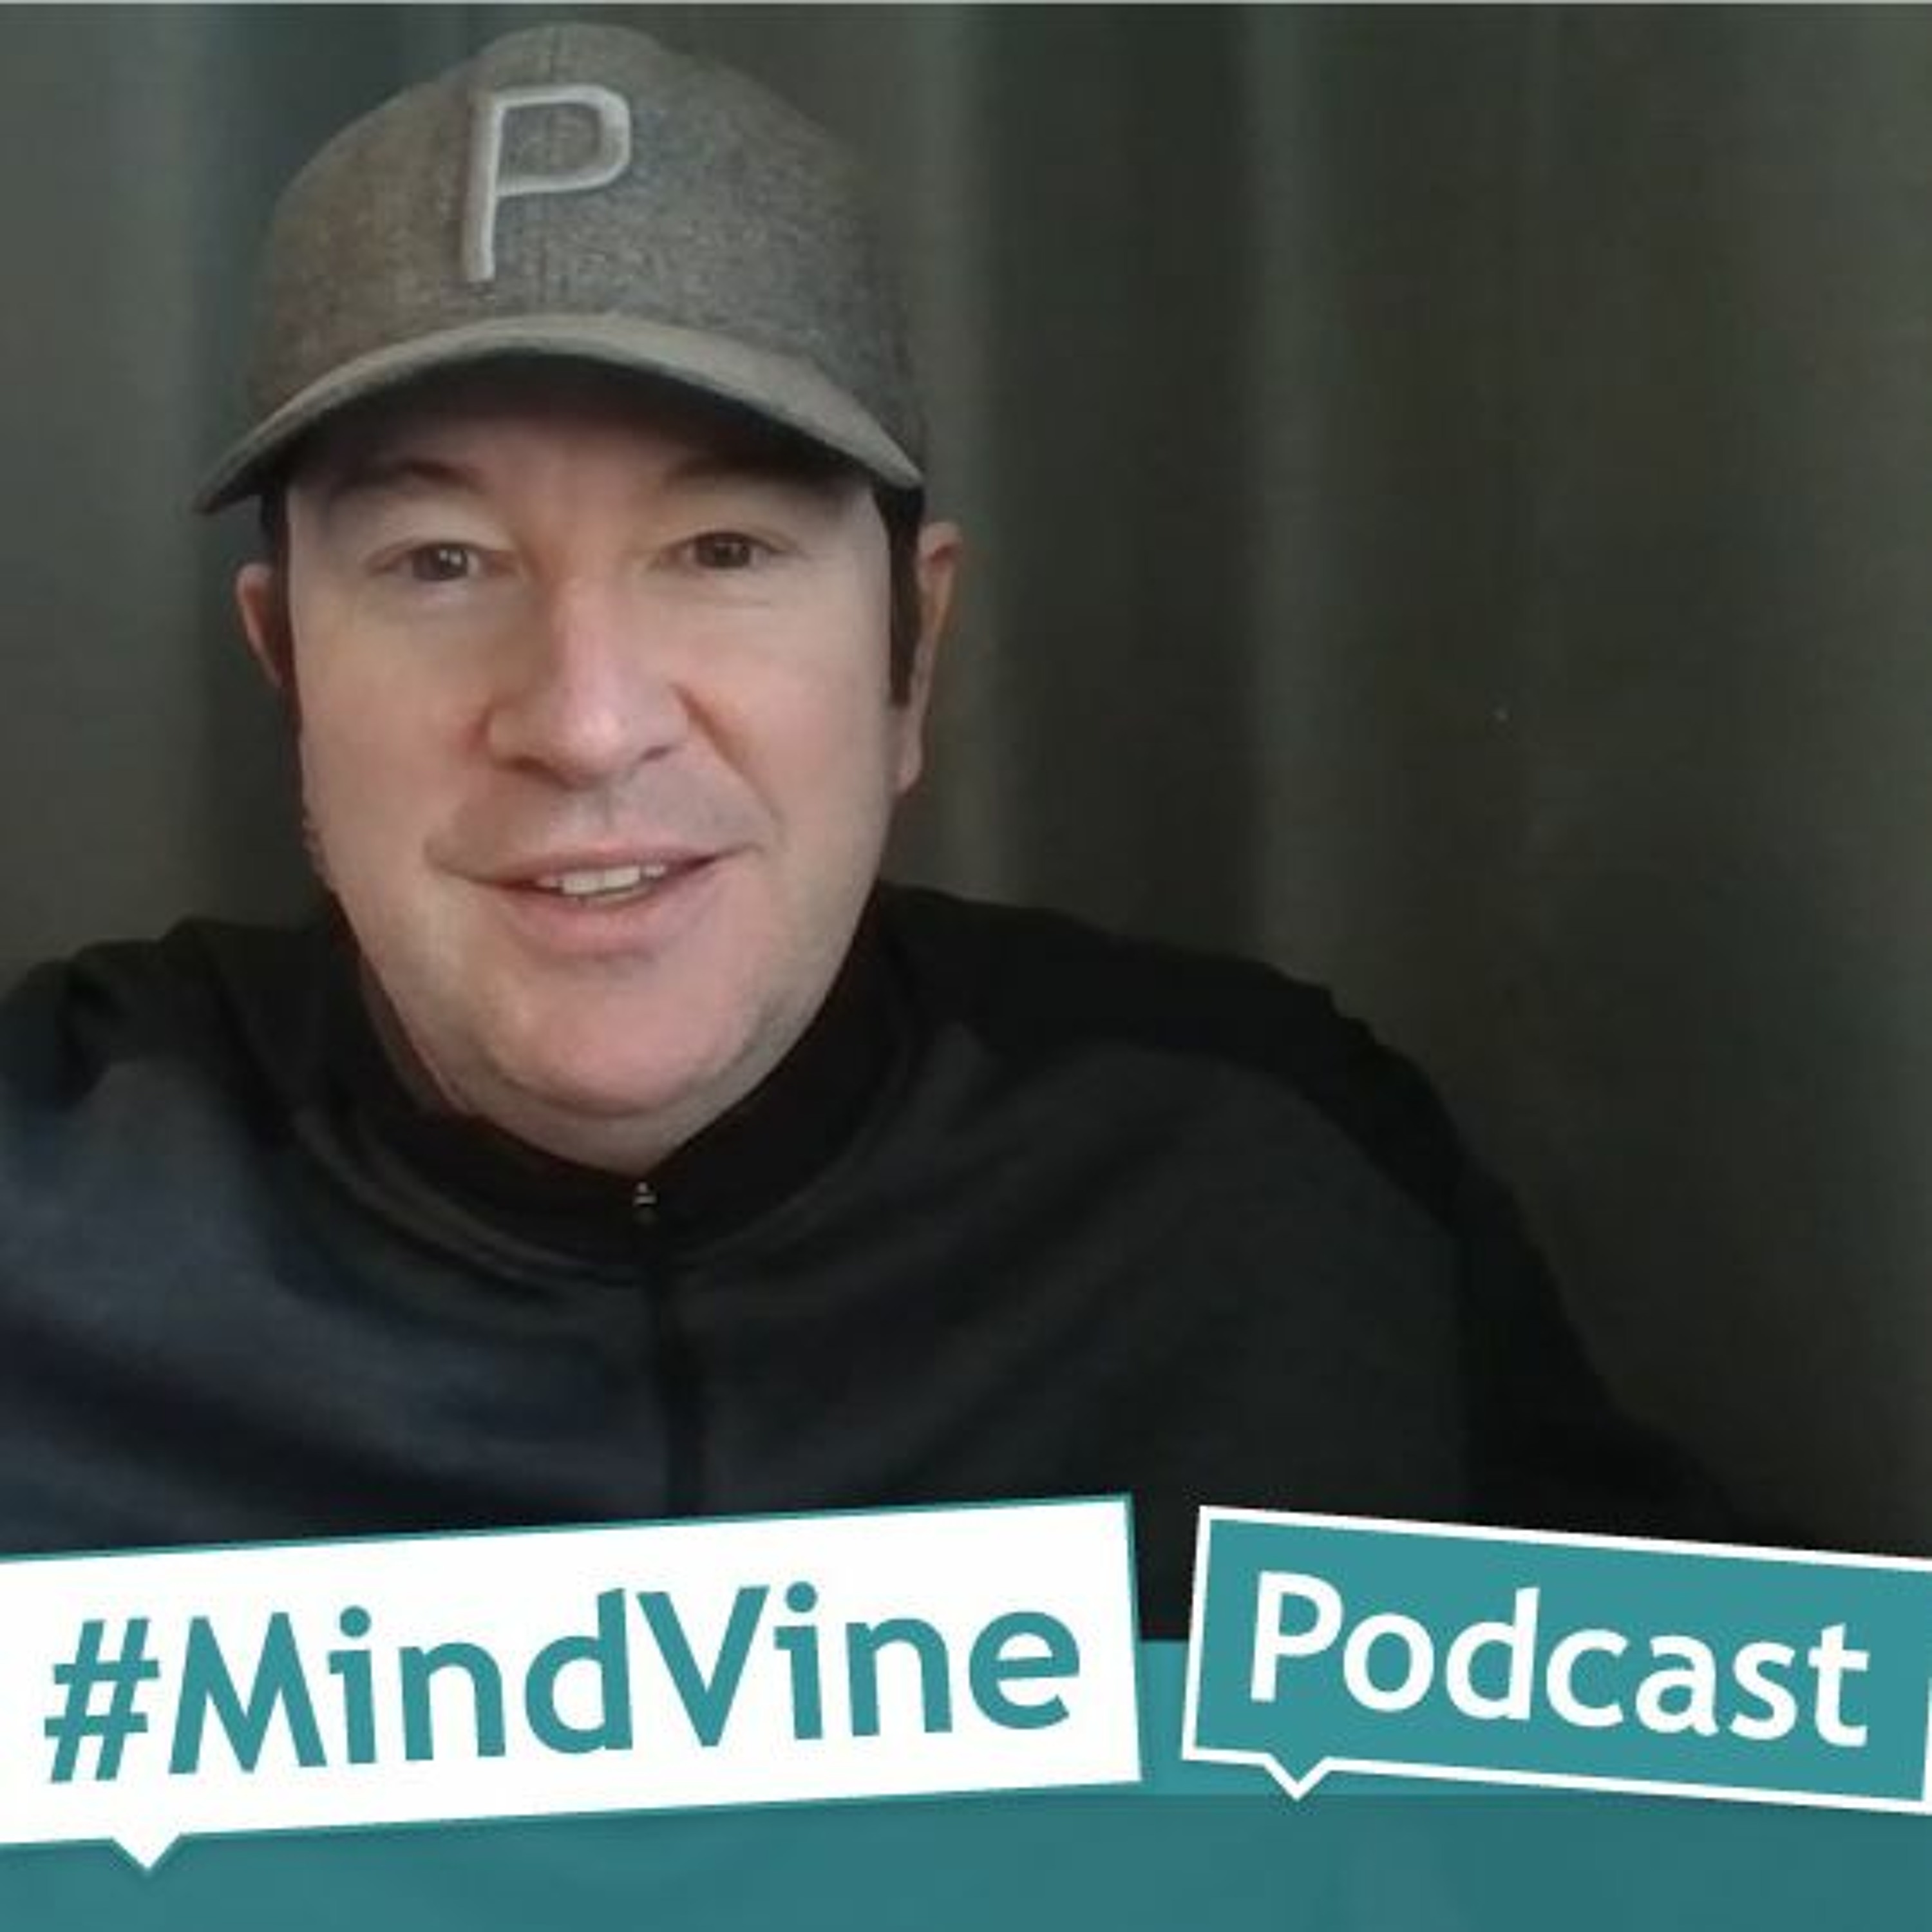 #MindVine​ Podcast Episode 93 - Sportsnet's Ken Reid Share Mental Health Journey